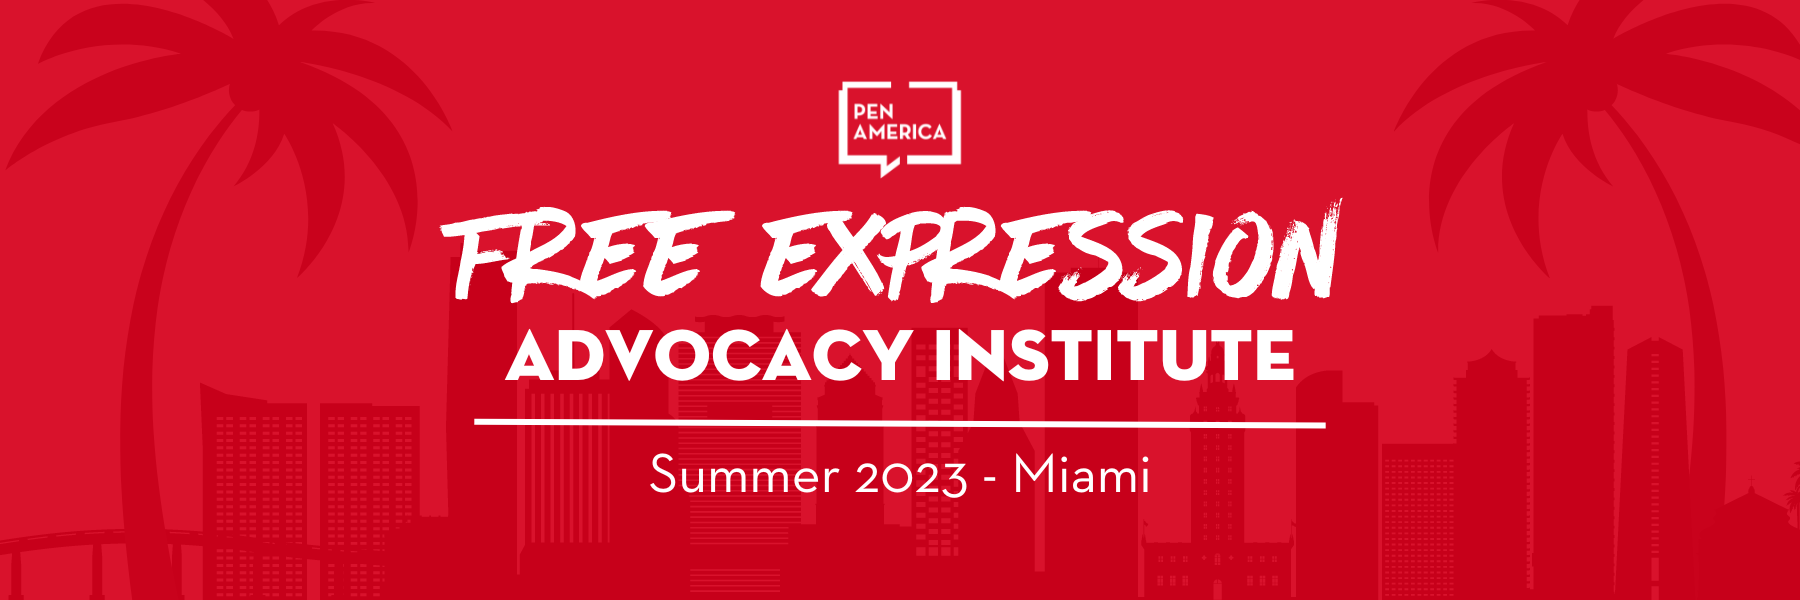 Summer 2023 Free Expression Advocacy Institute Logo - Miami